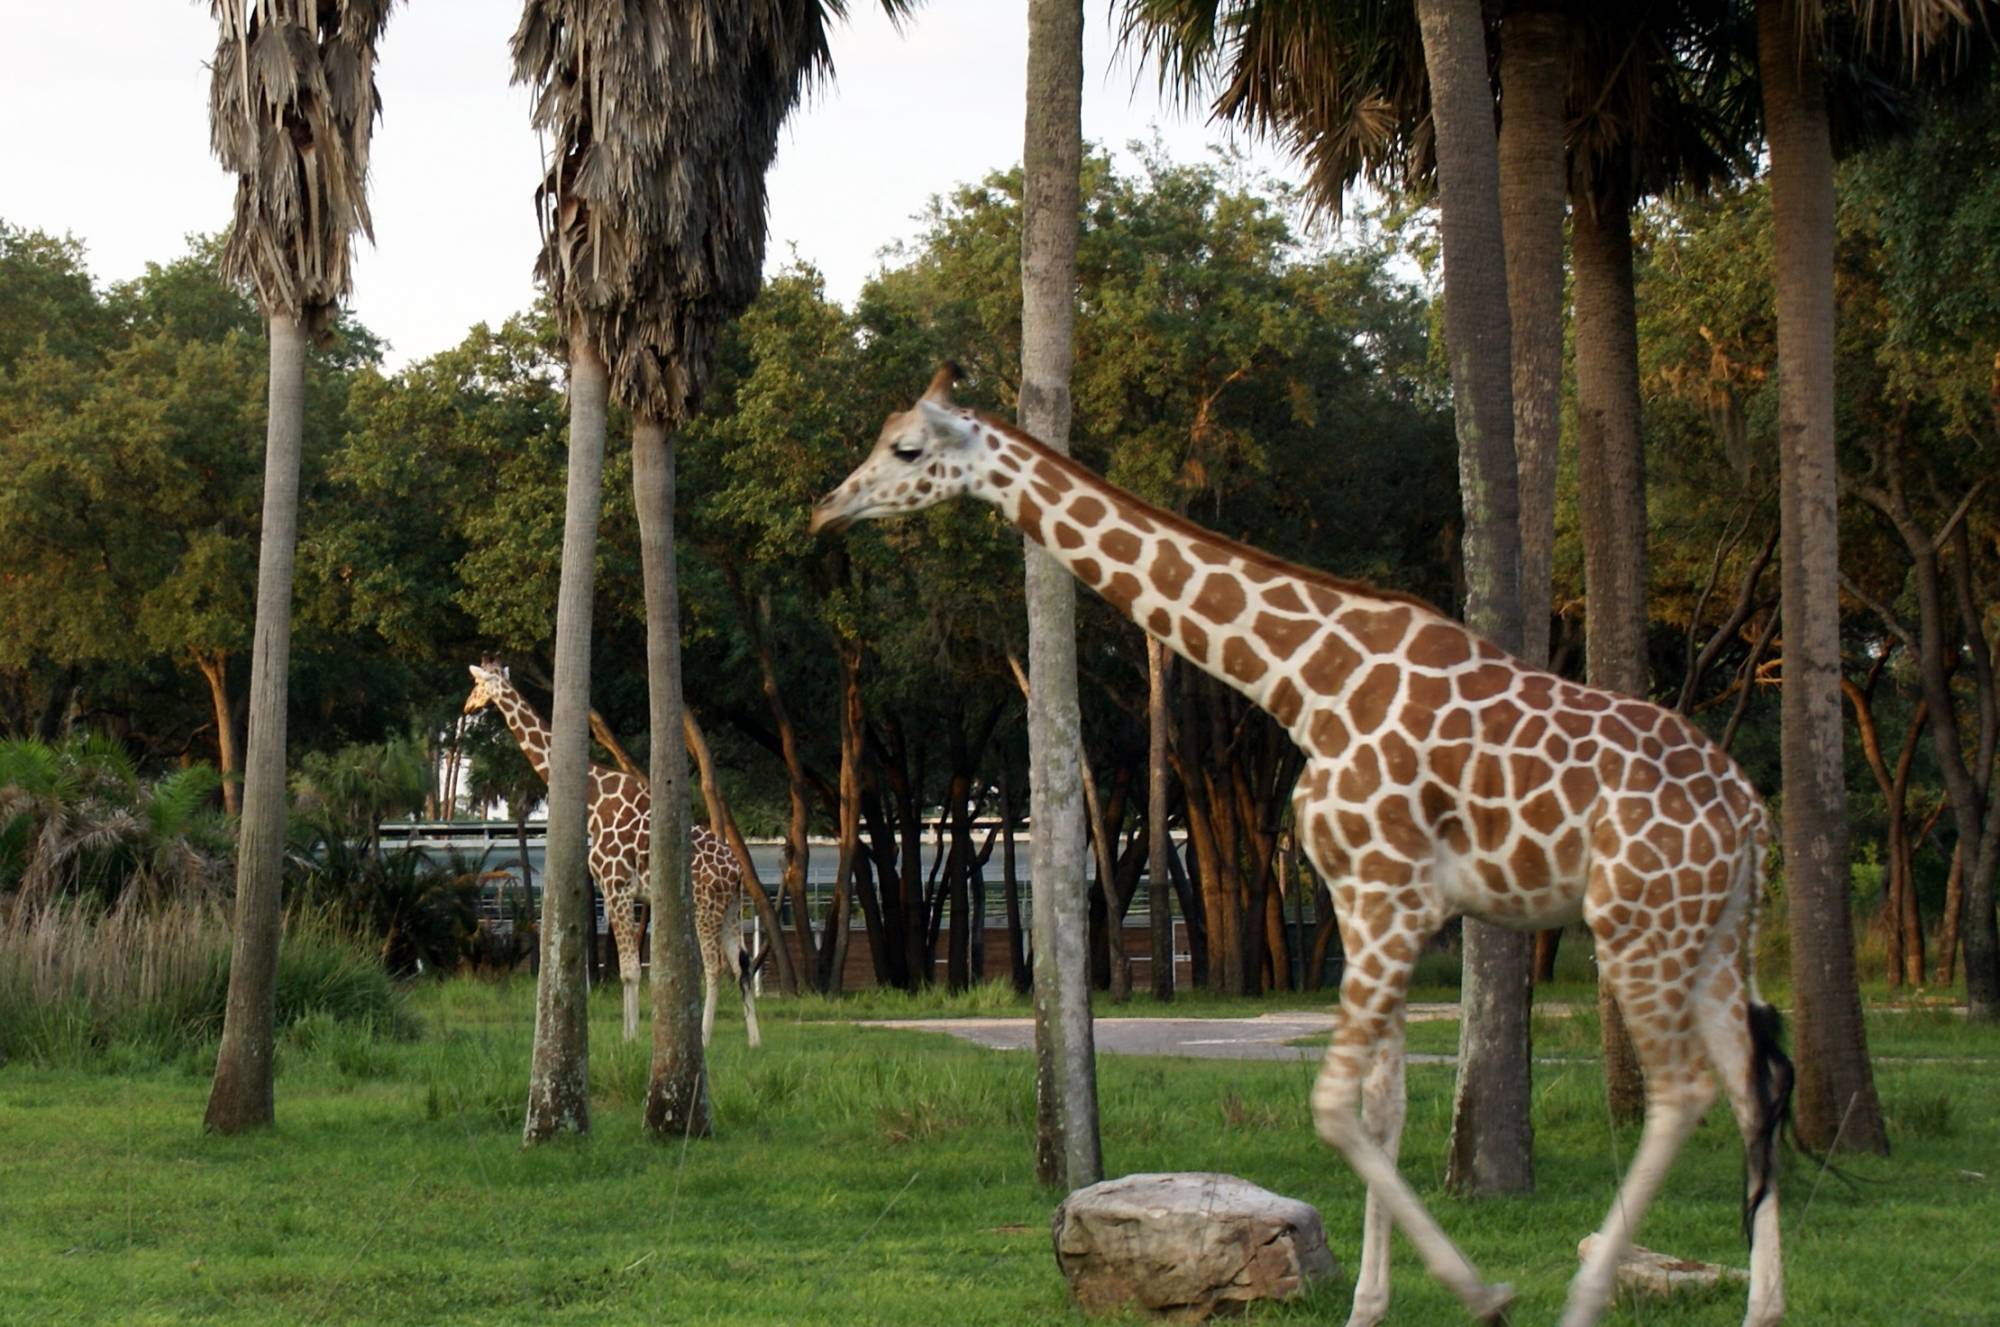 Giraffe at the Sanaa Outlook